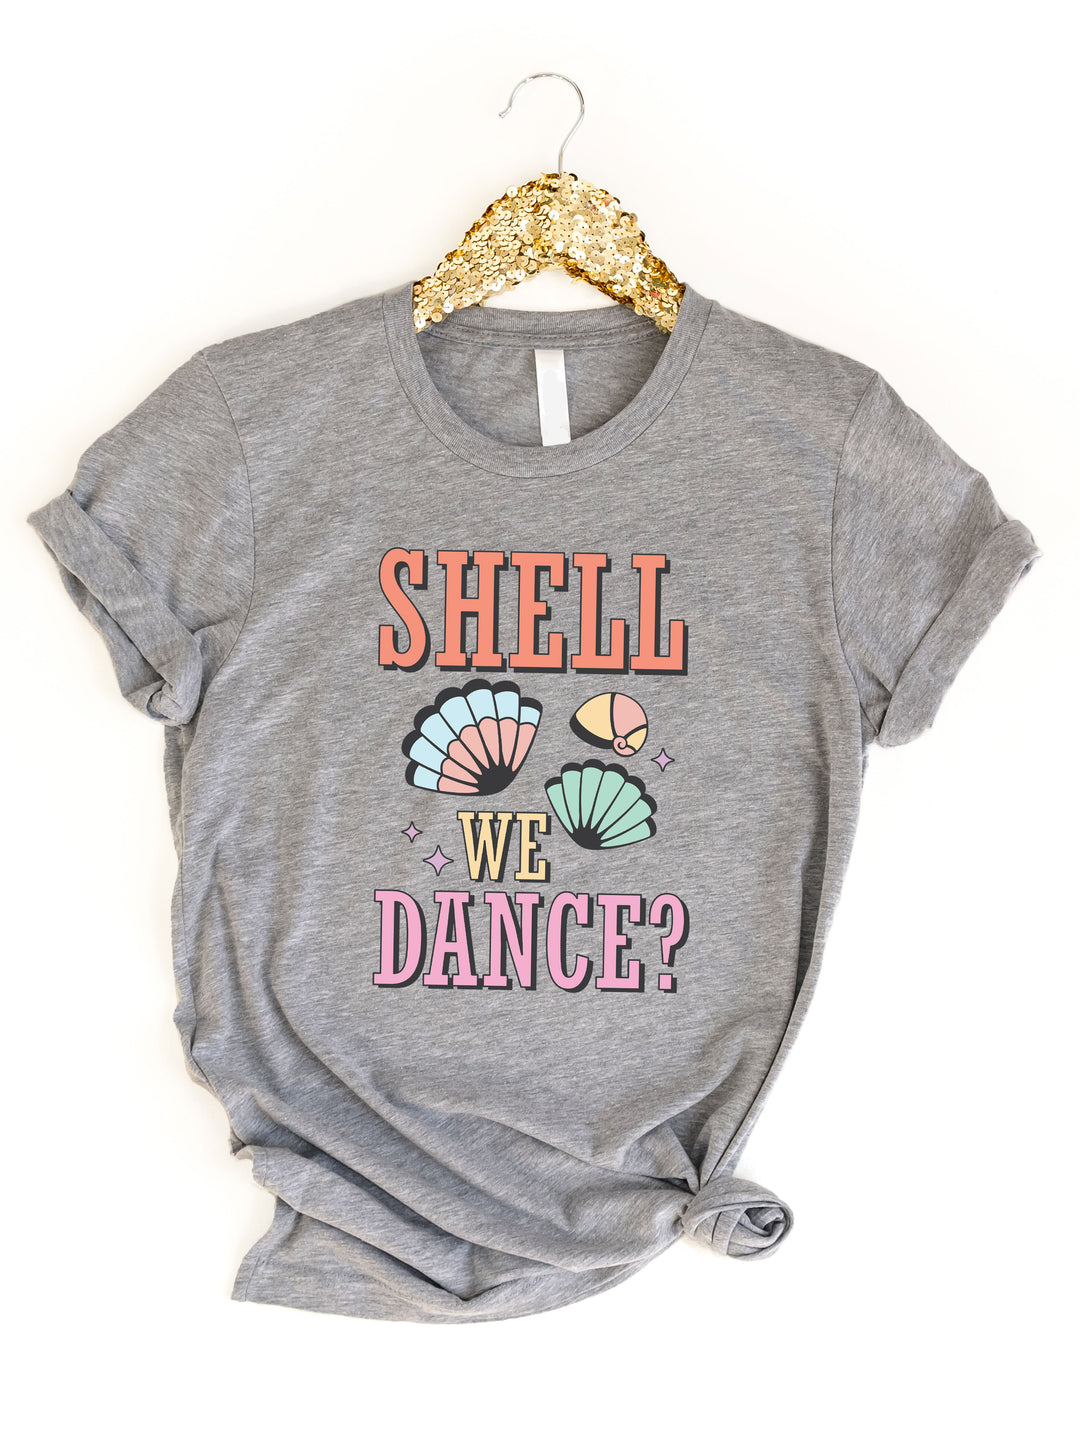 Shell we Dance Graphic Tee